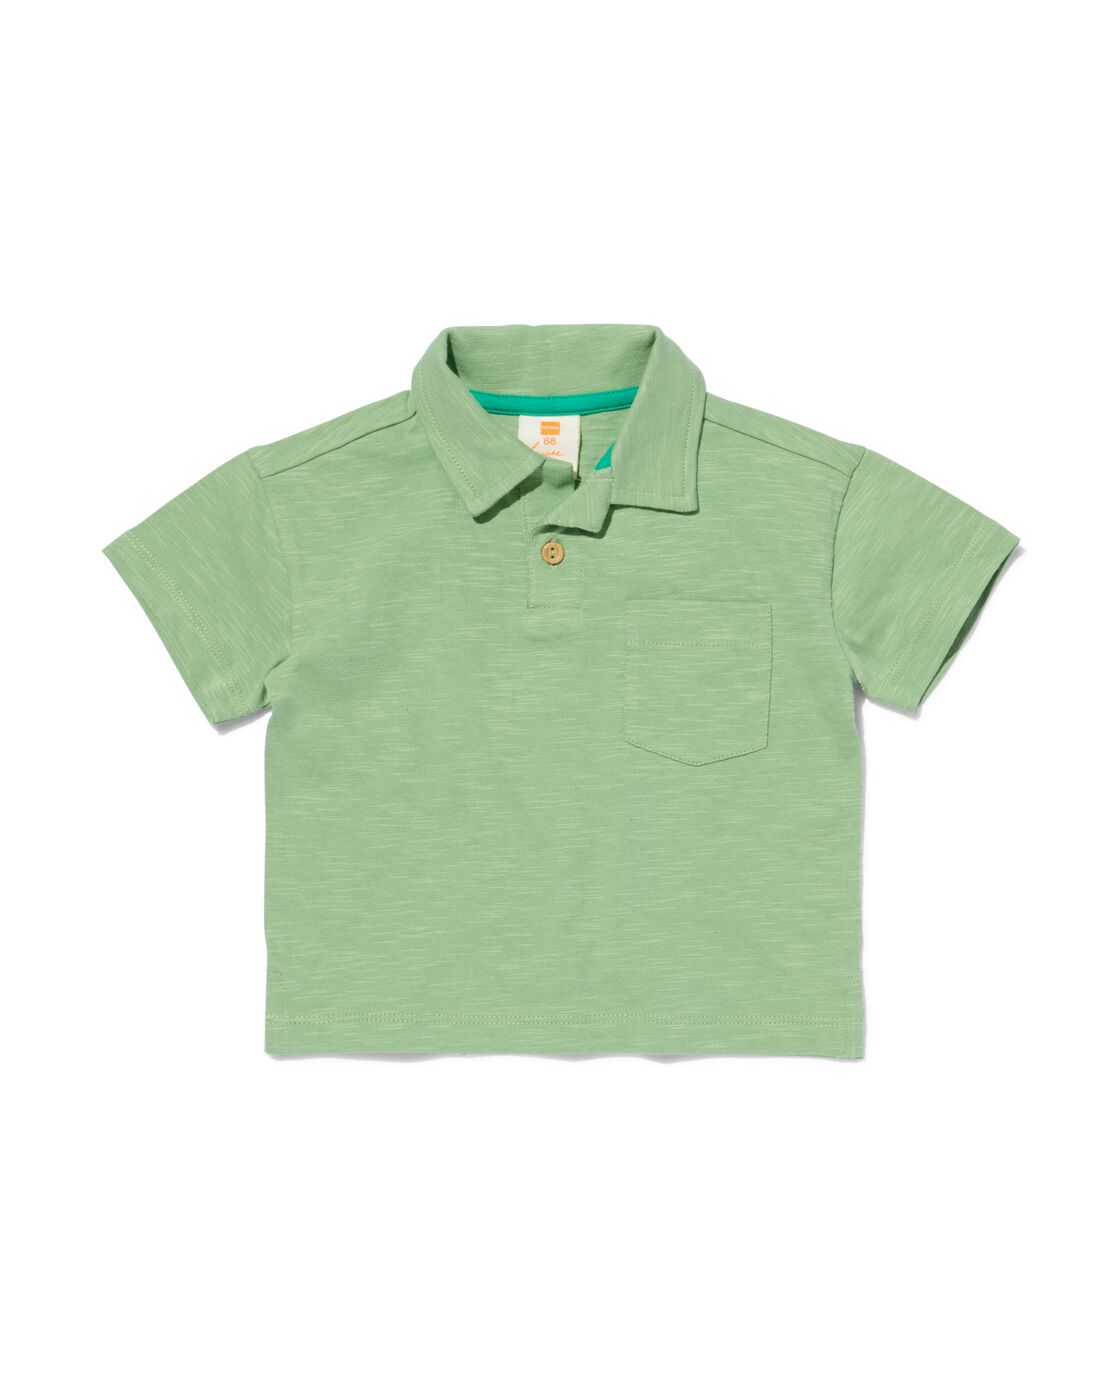 Image of HEMA Baby Poloshirt Groen (groen)